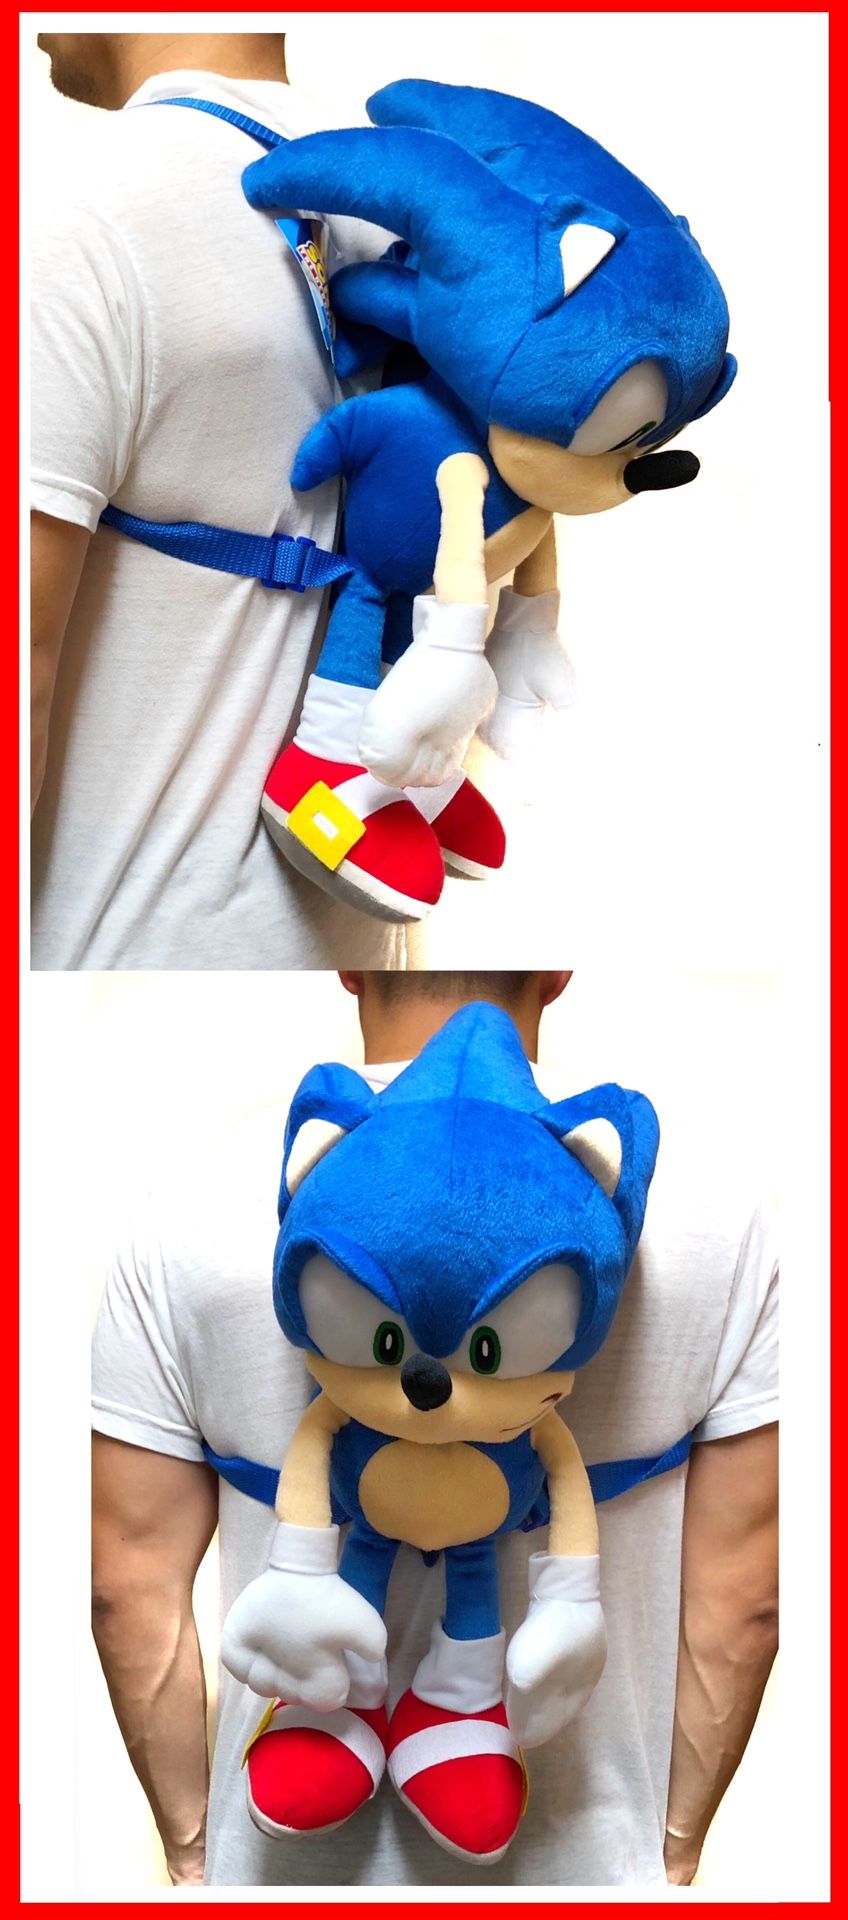 Brand NEW! Sonic the Hedgehog soft toy plush backpack video game cartoon anime characters kid’s bag Sega